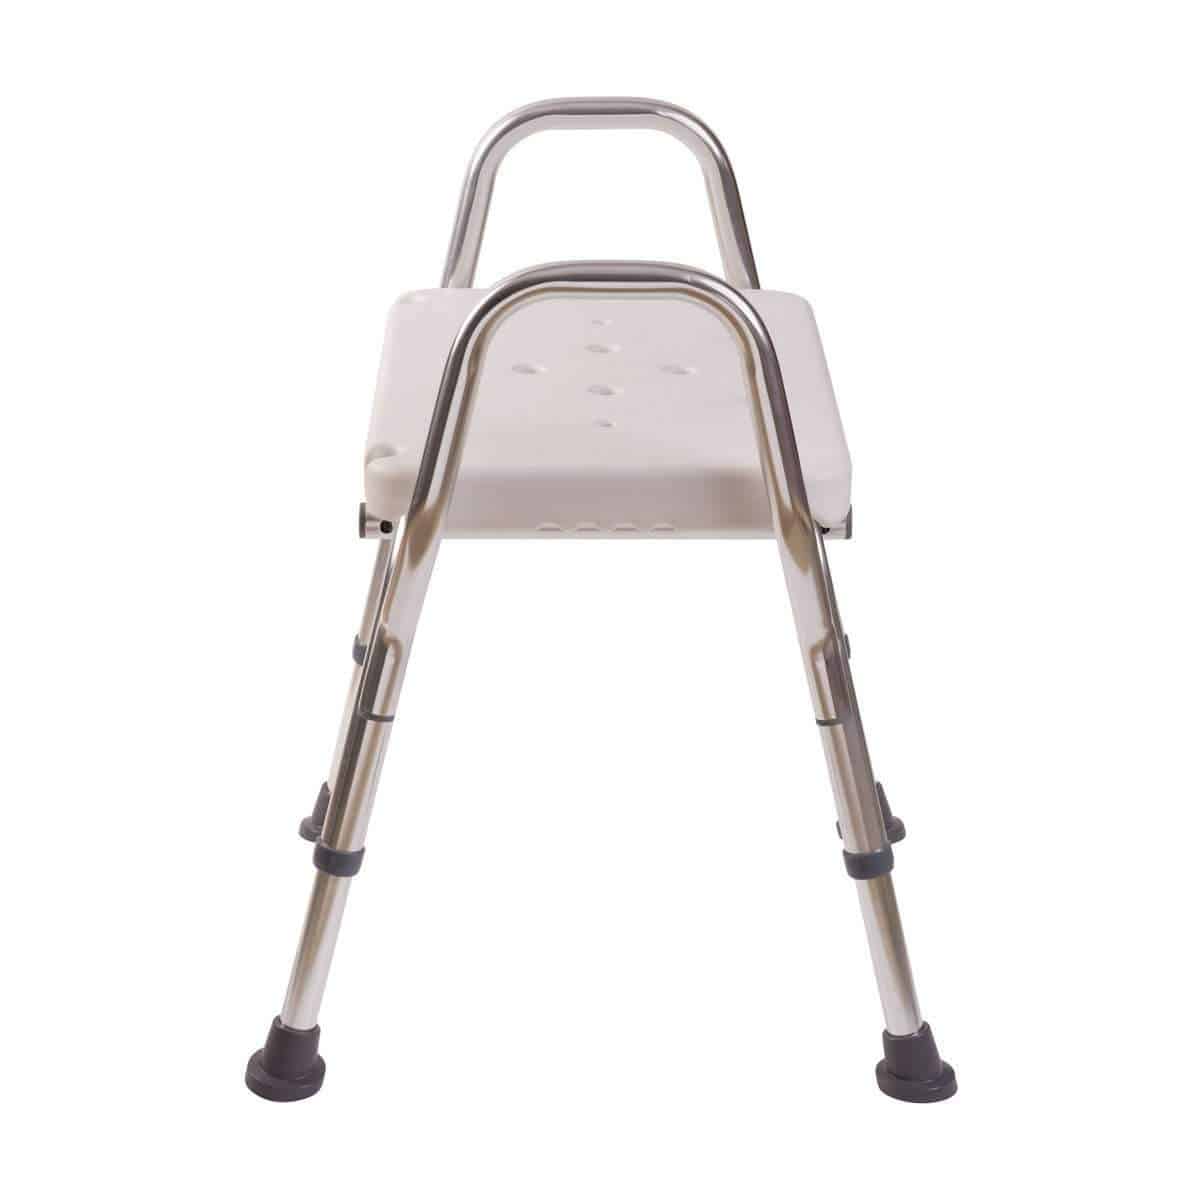 DMI Heavy Duty Bath and Shower Chairs - Senior.com Bath Benches & Seats